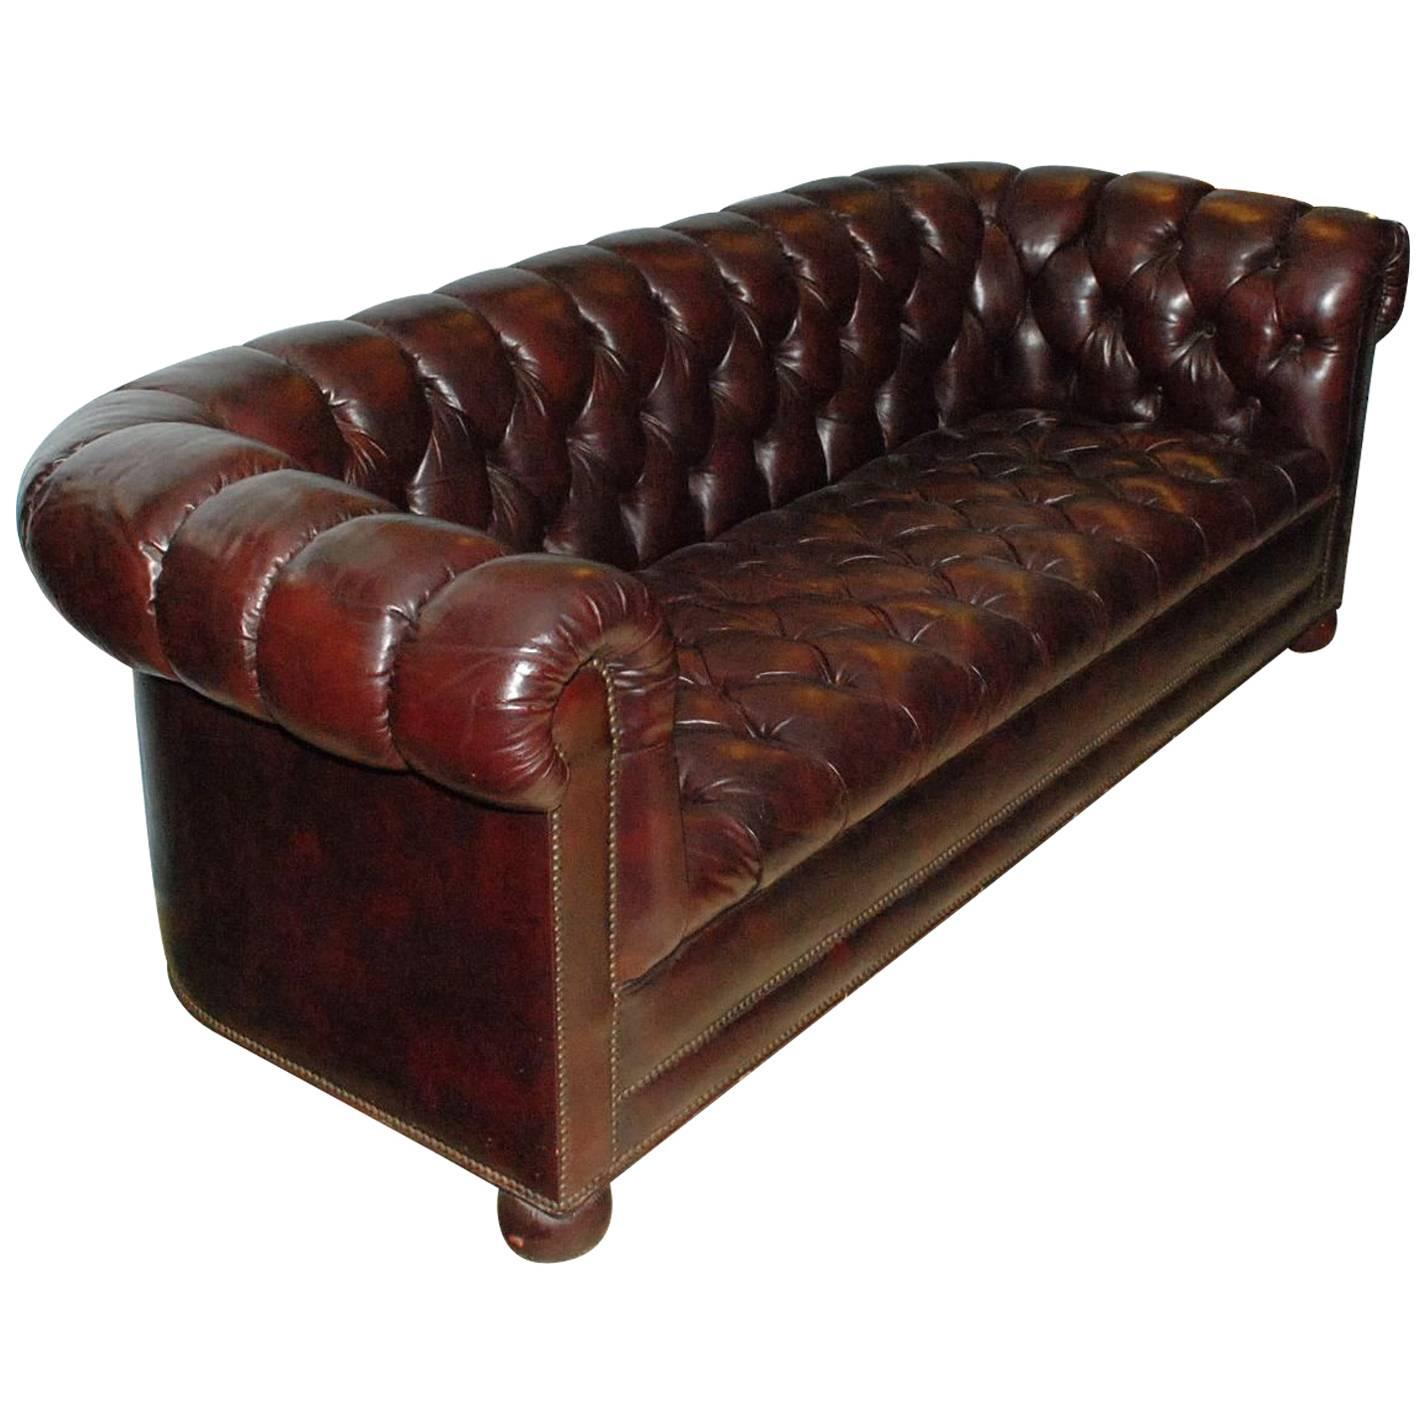 1960s Burgundy Leather Chesterfield Sofa